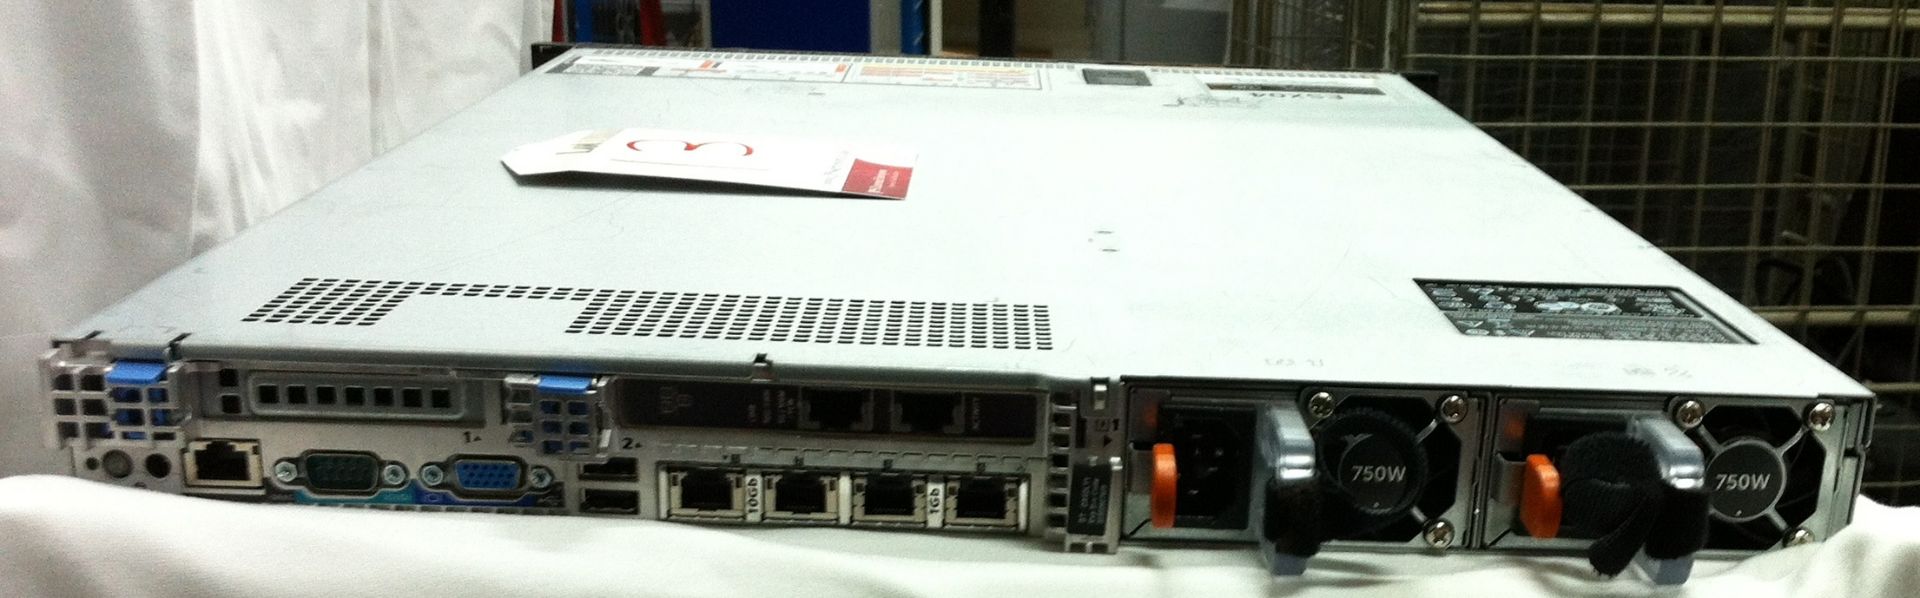 Dell Poweredge R620 Server - Image 3 of 3